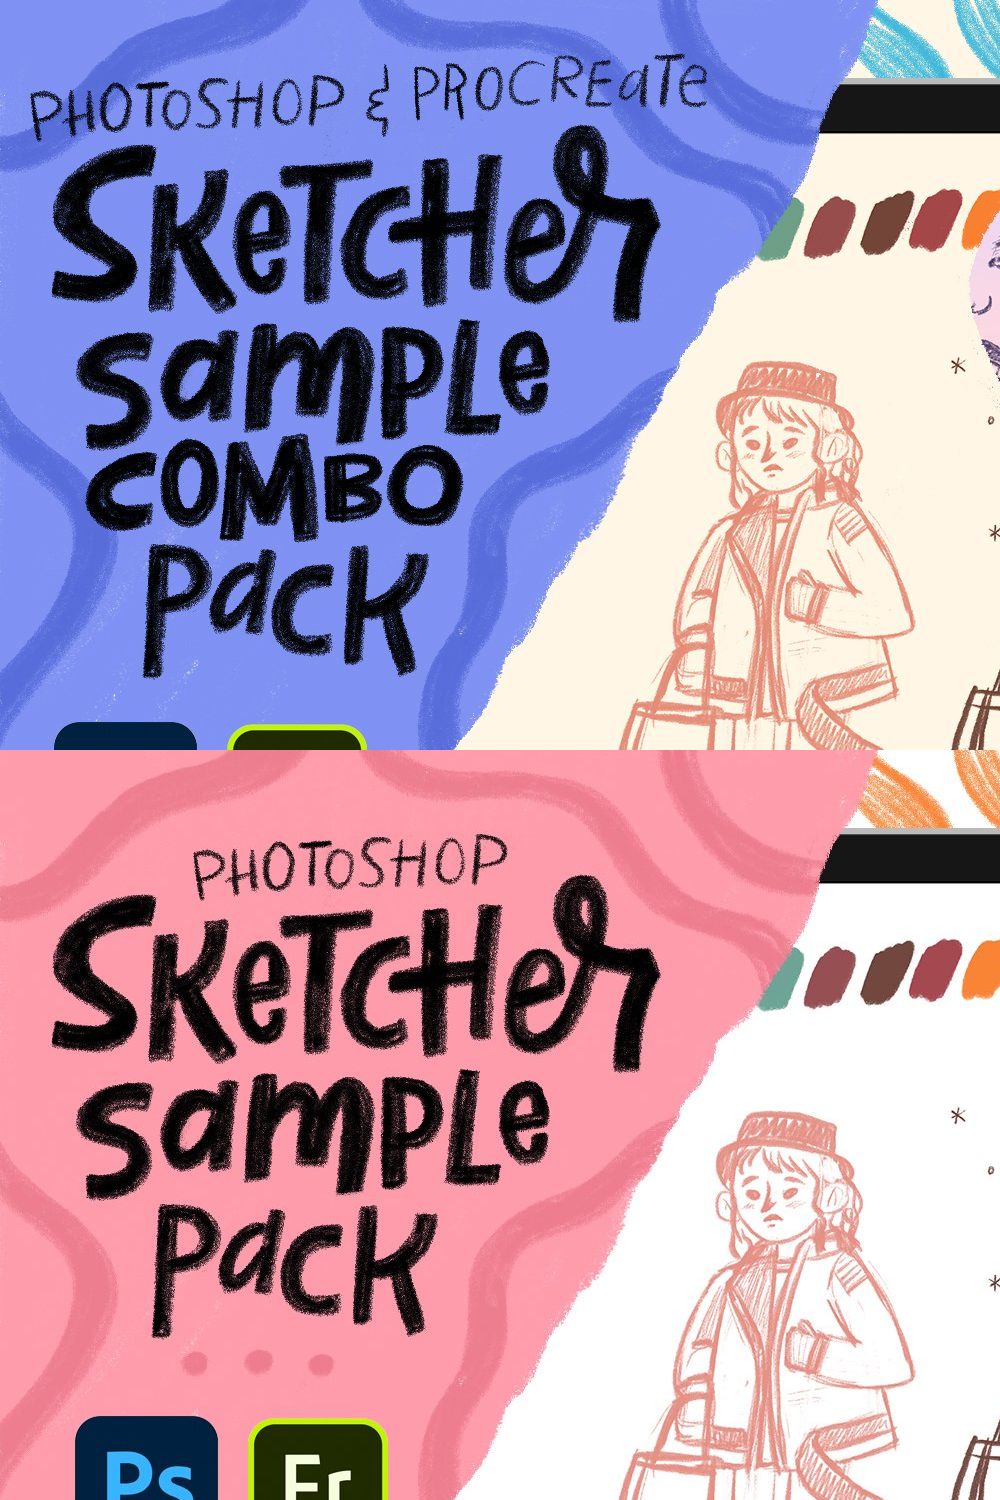 Sketcher Sample Combo Pack pinterest preview image.